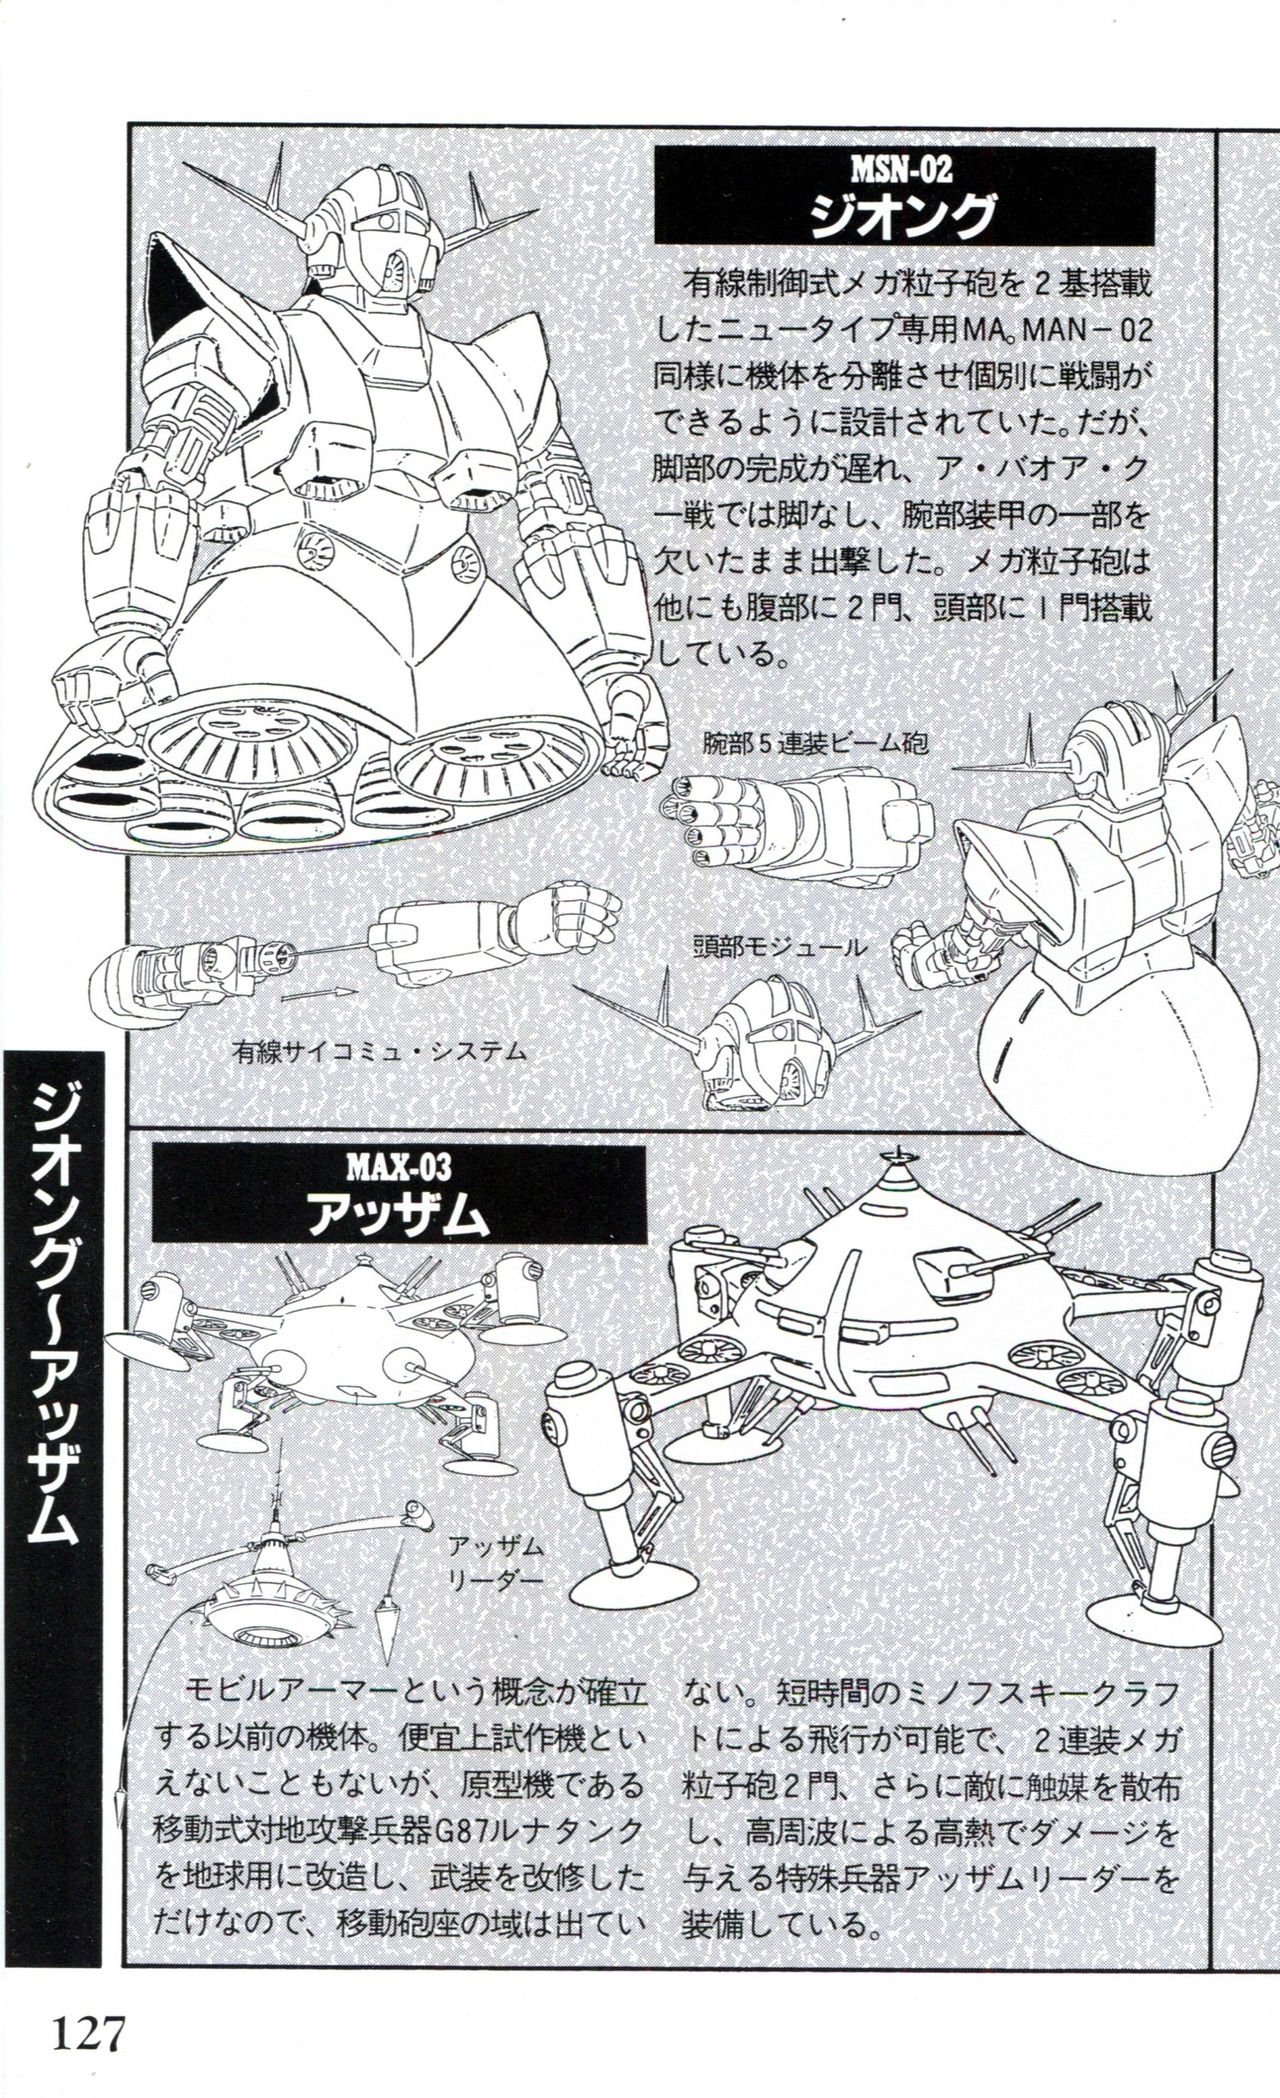 Mobile Suit Gundam U.C. Box MS Gundam Encyclopedia NO.01 - Mobile Suit Gundam 126